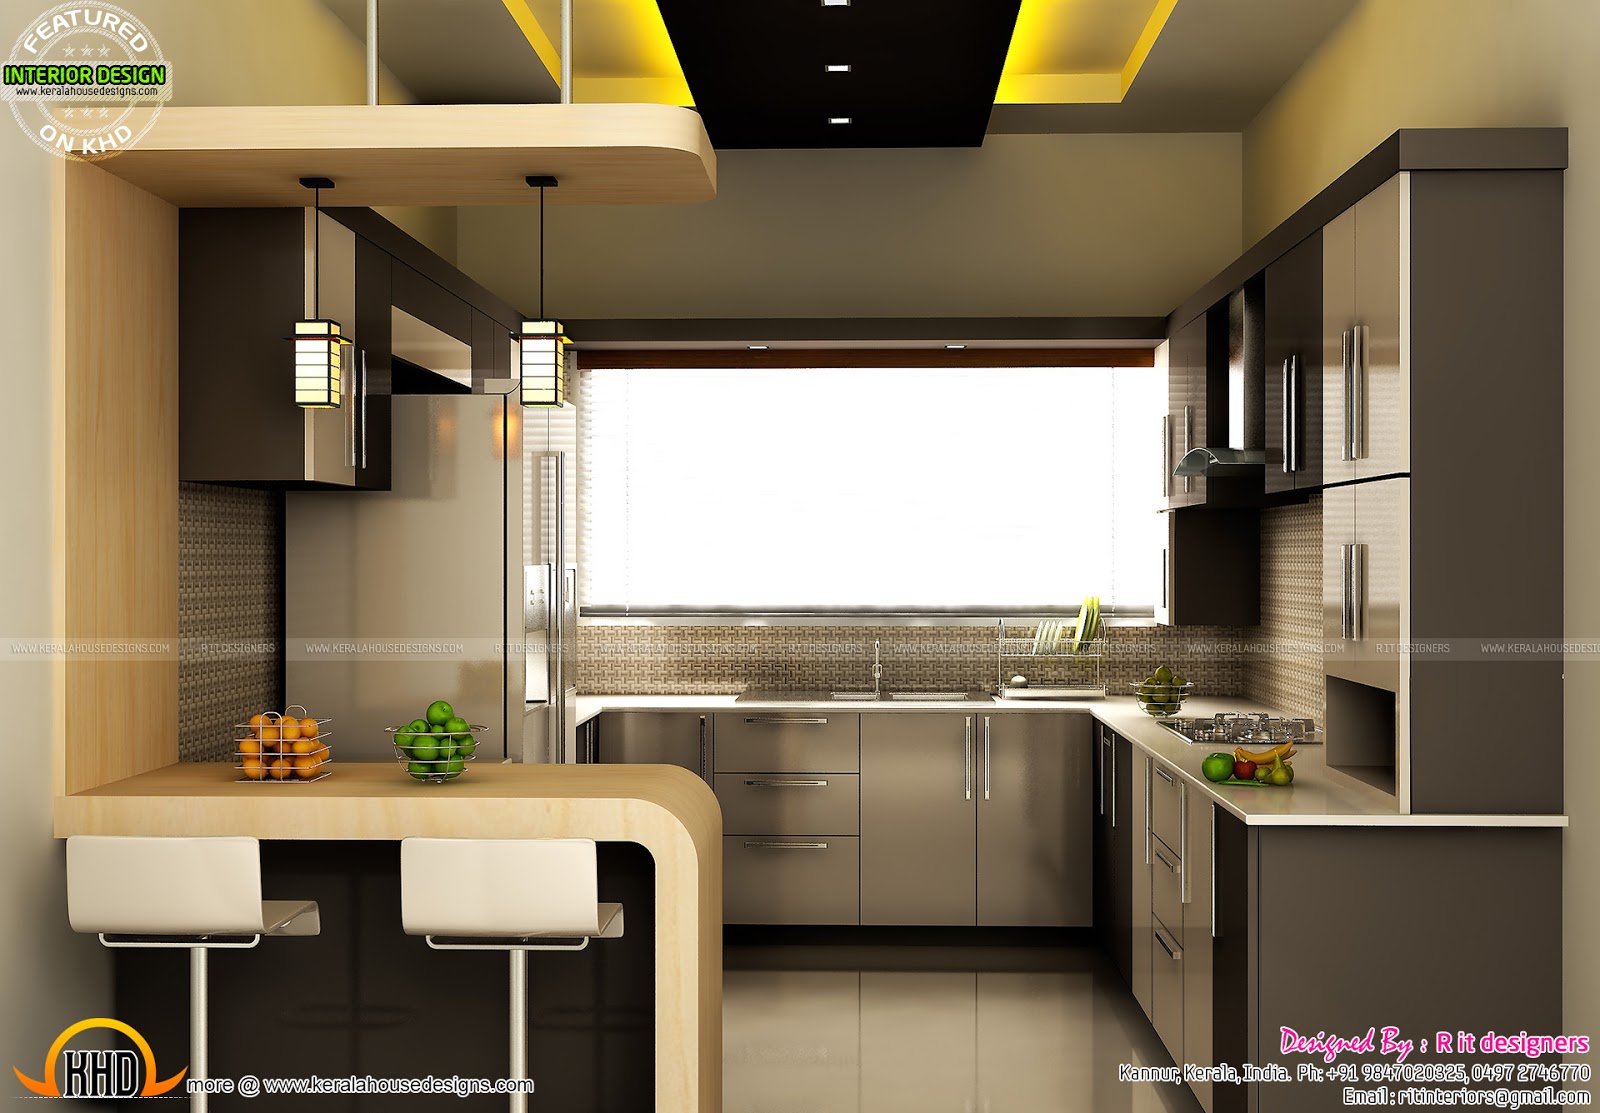 Modular kitchen, dining and bedroom interior   Kerala home design ...